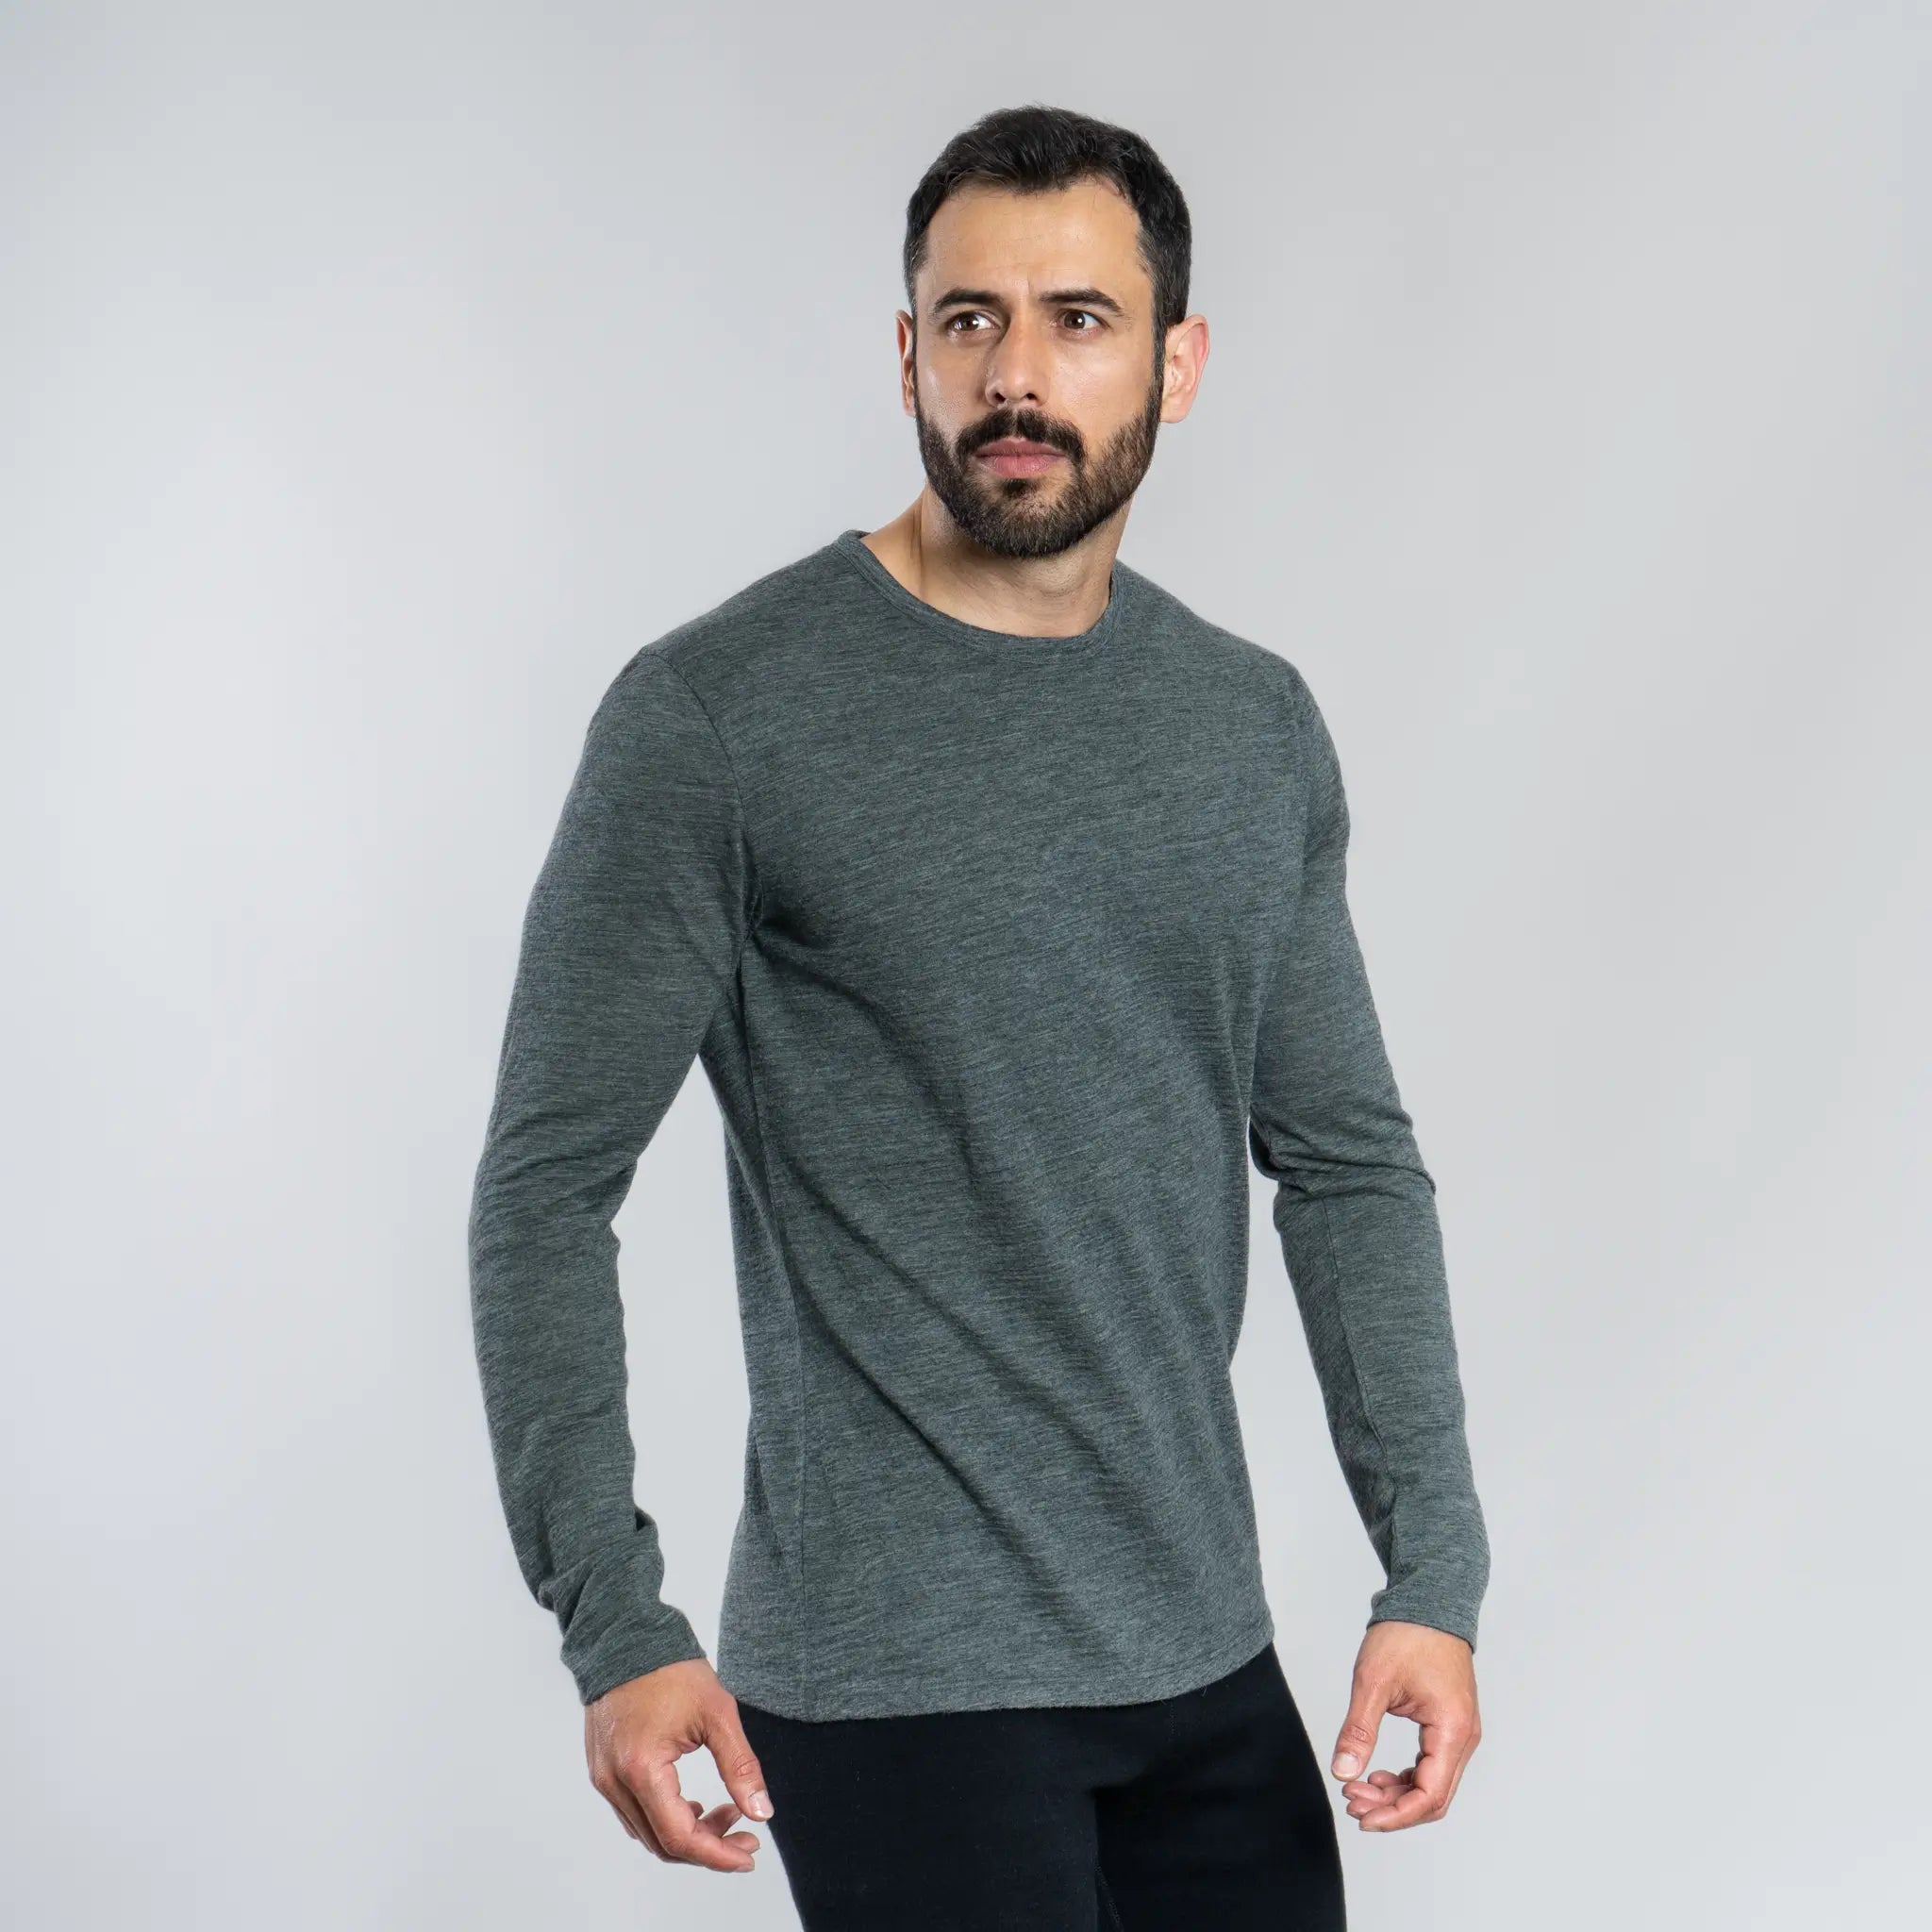 Men's Alpaca Wool Shirts & Tops | Soft, Breathable, Moisture-Wicking ...